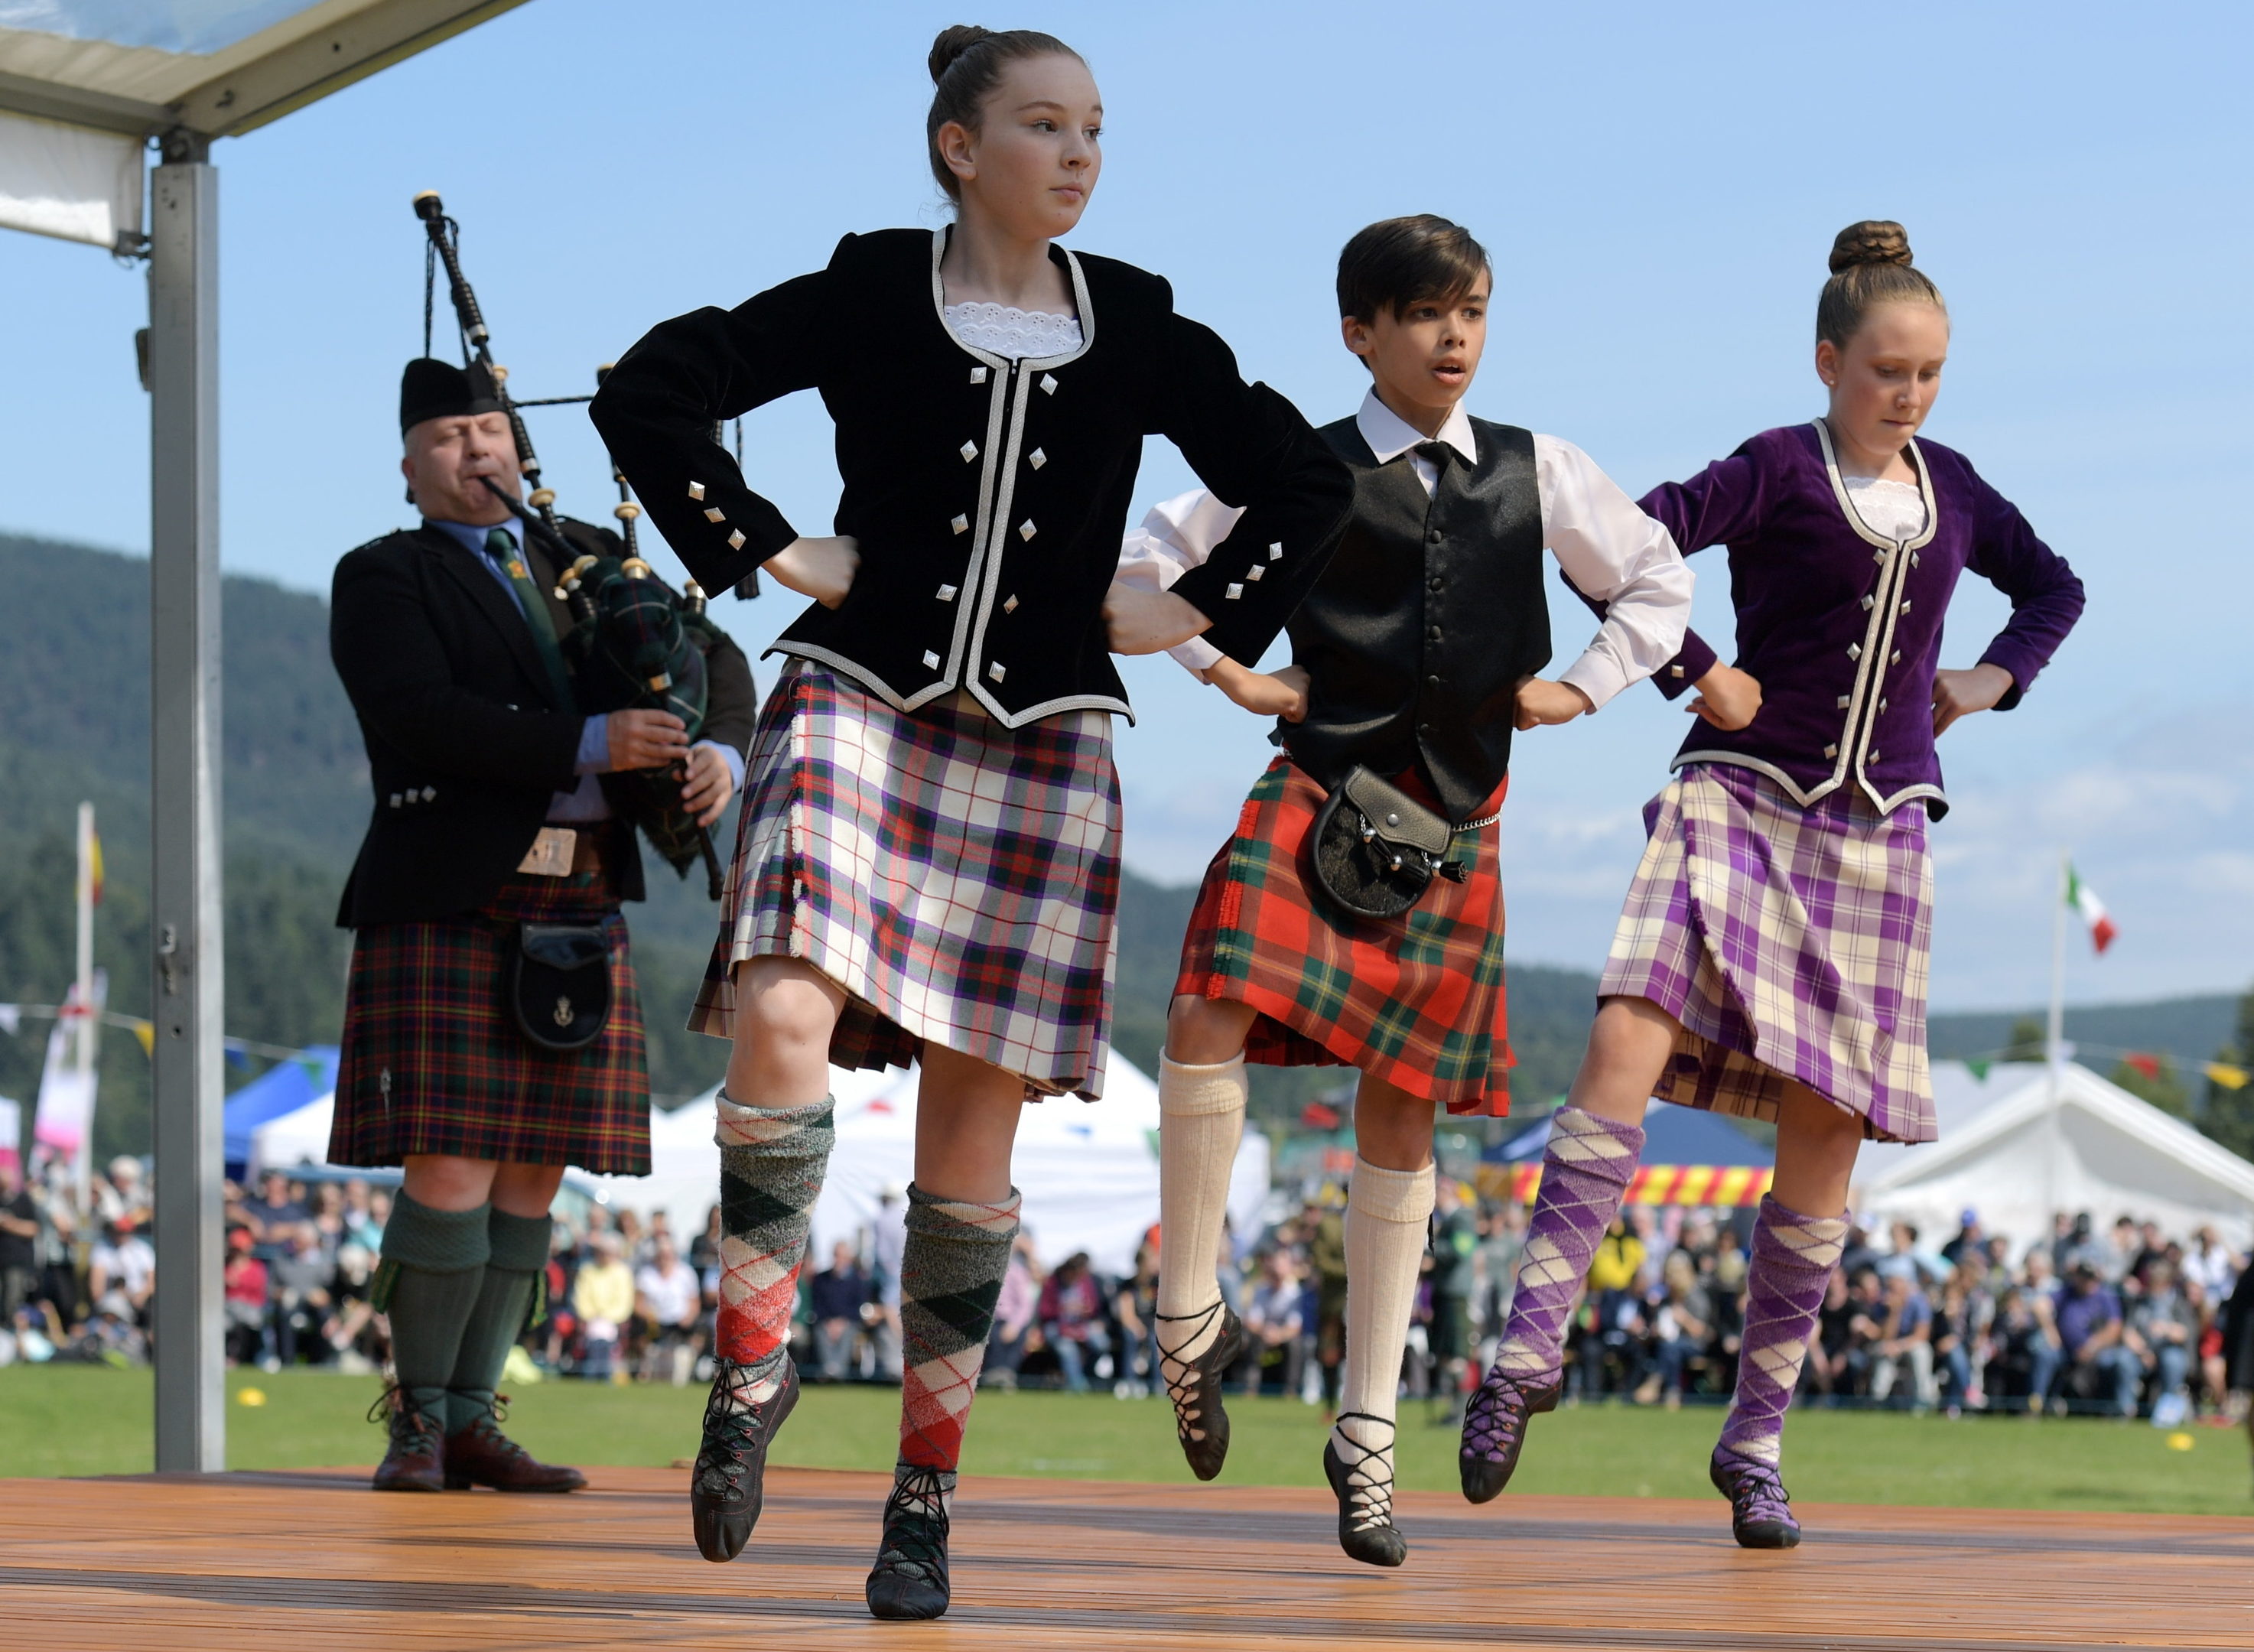 Council leader plans to enhance Aberdeen Highland games